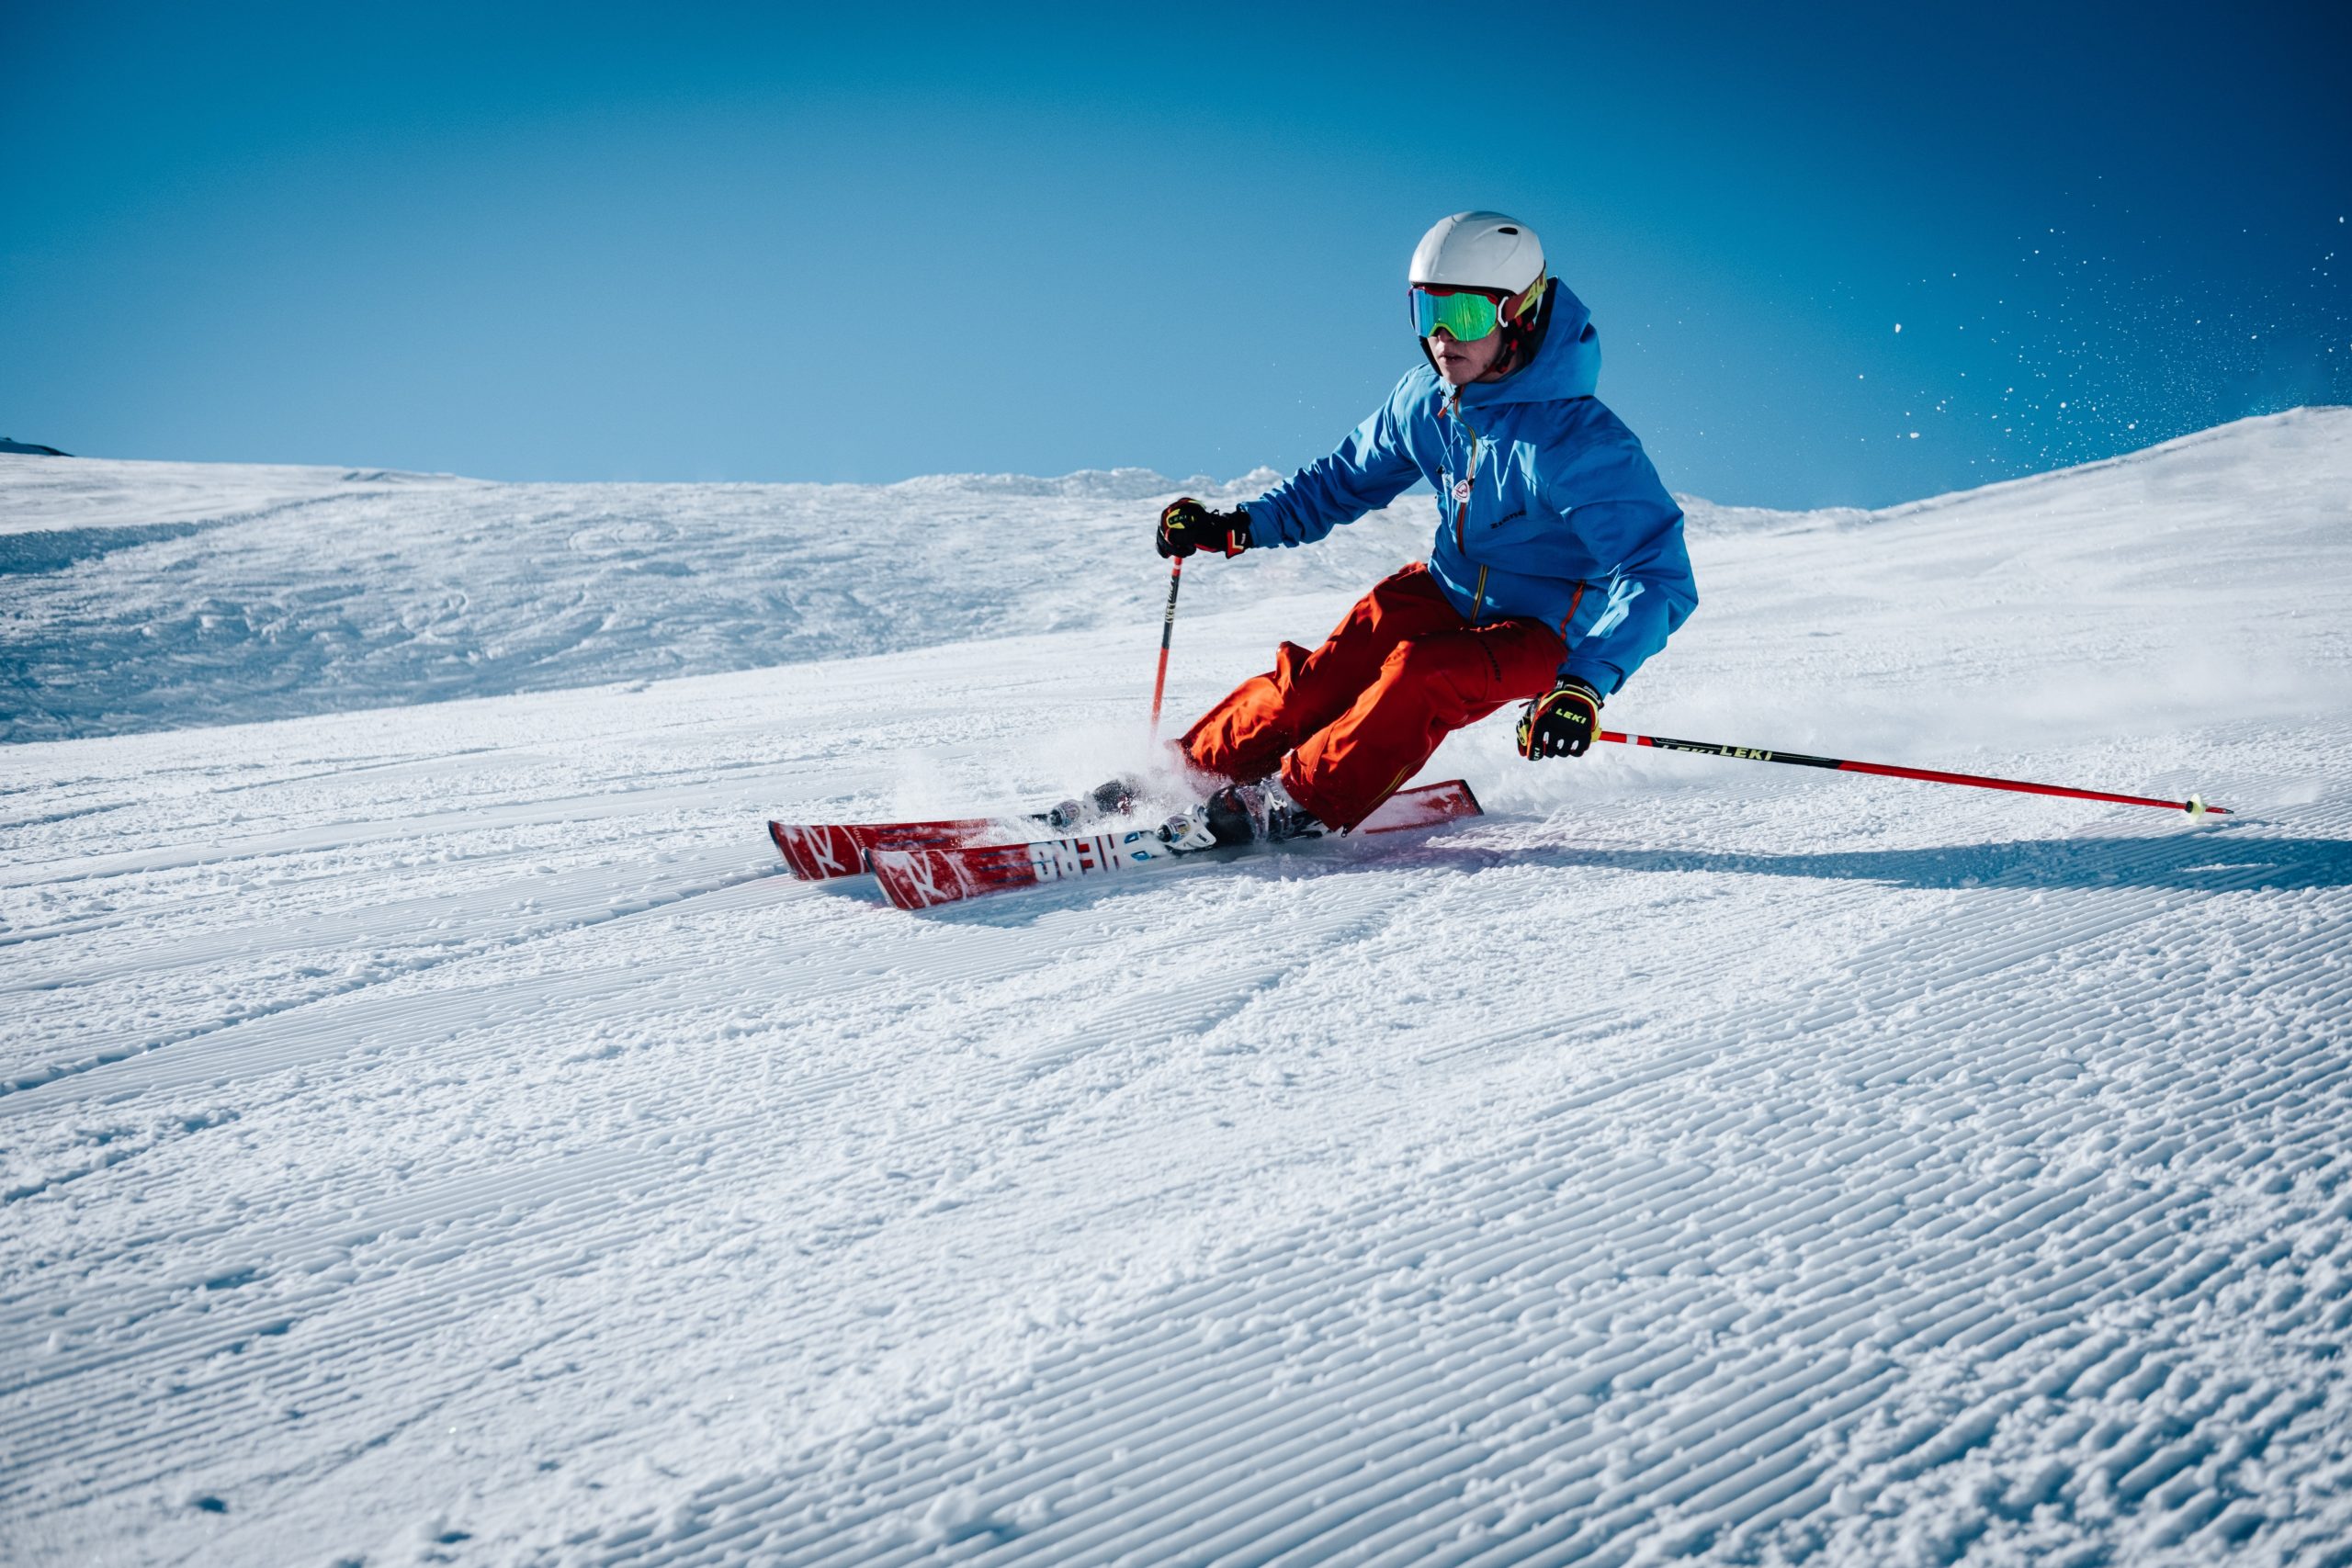 World-class Skiing